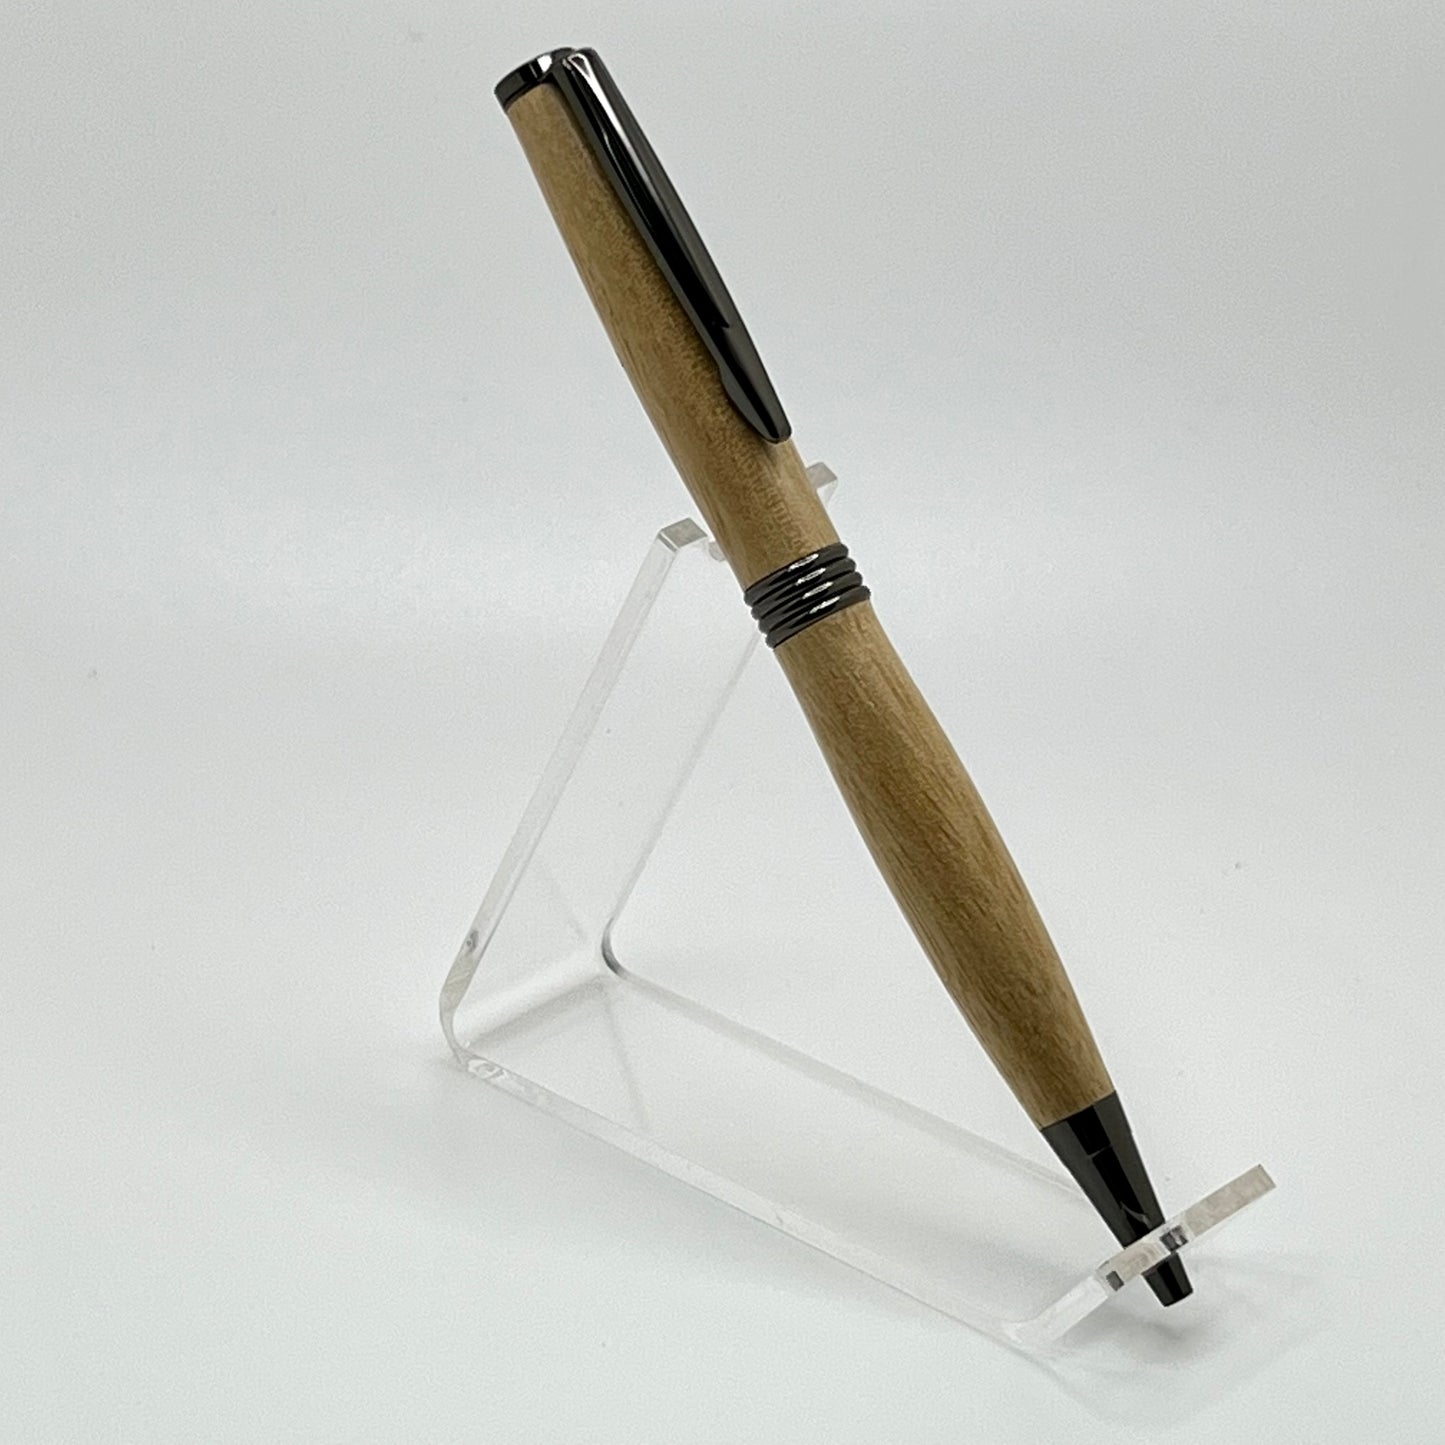 Trimline Twist Pen With Avodire Wood